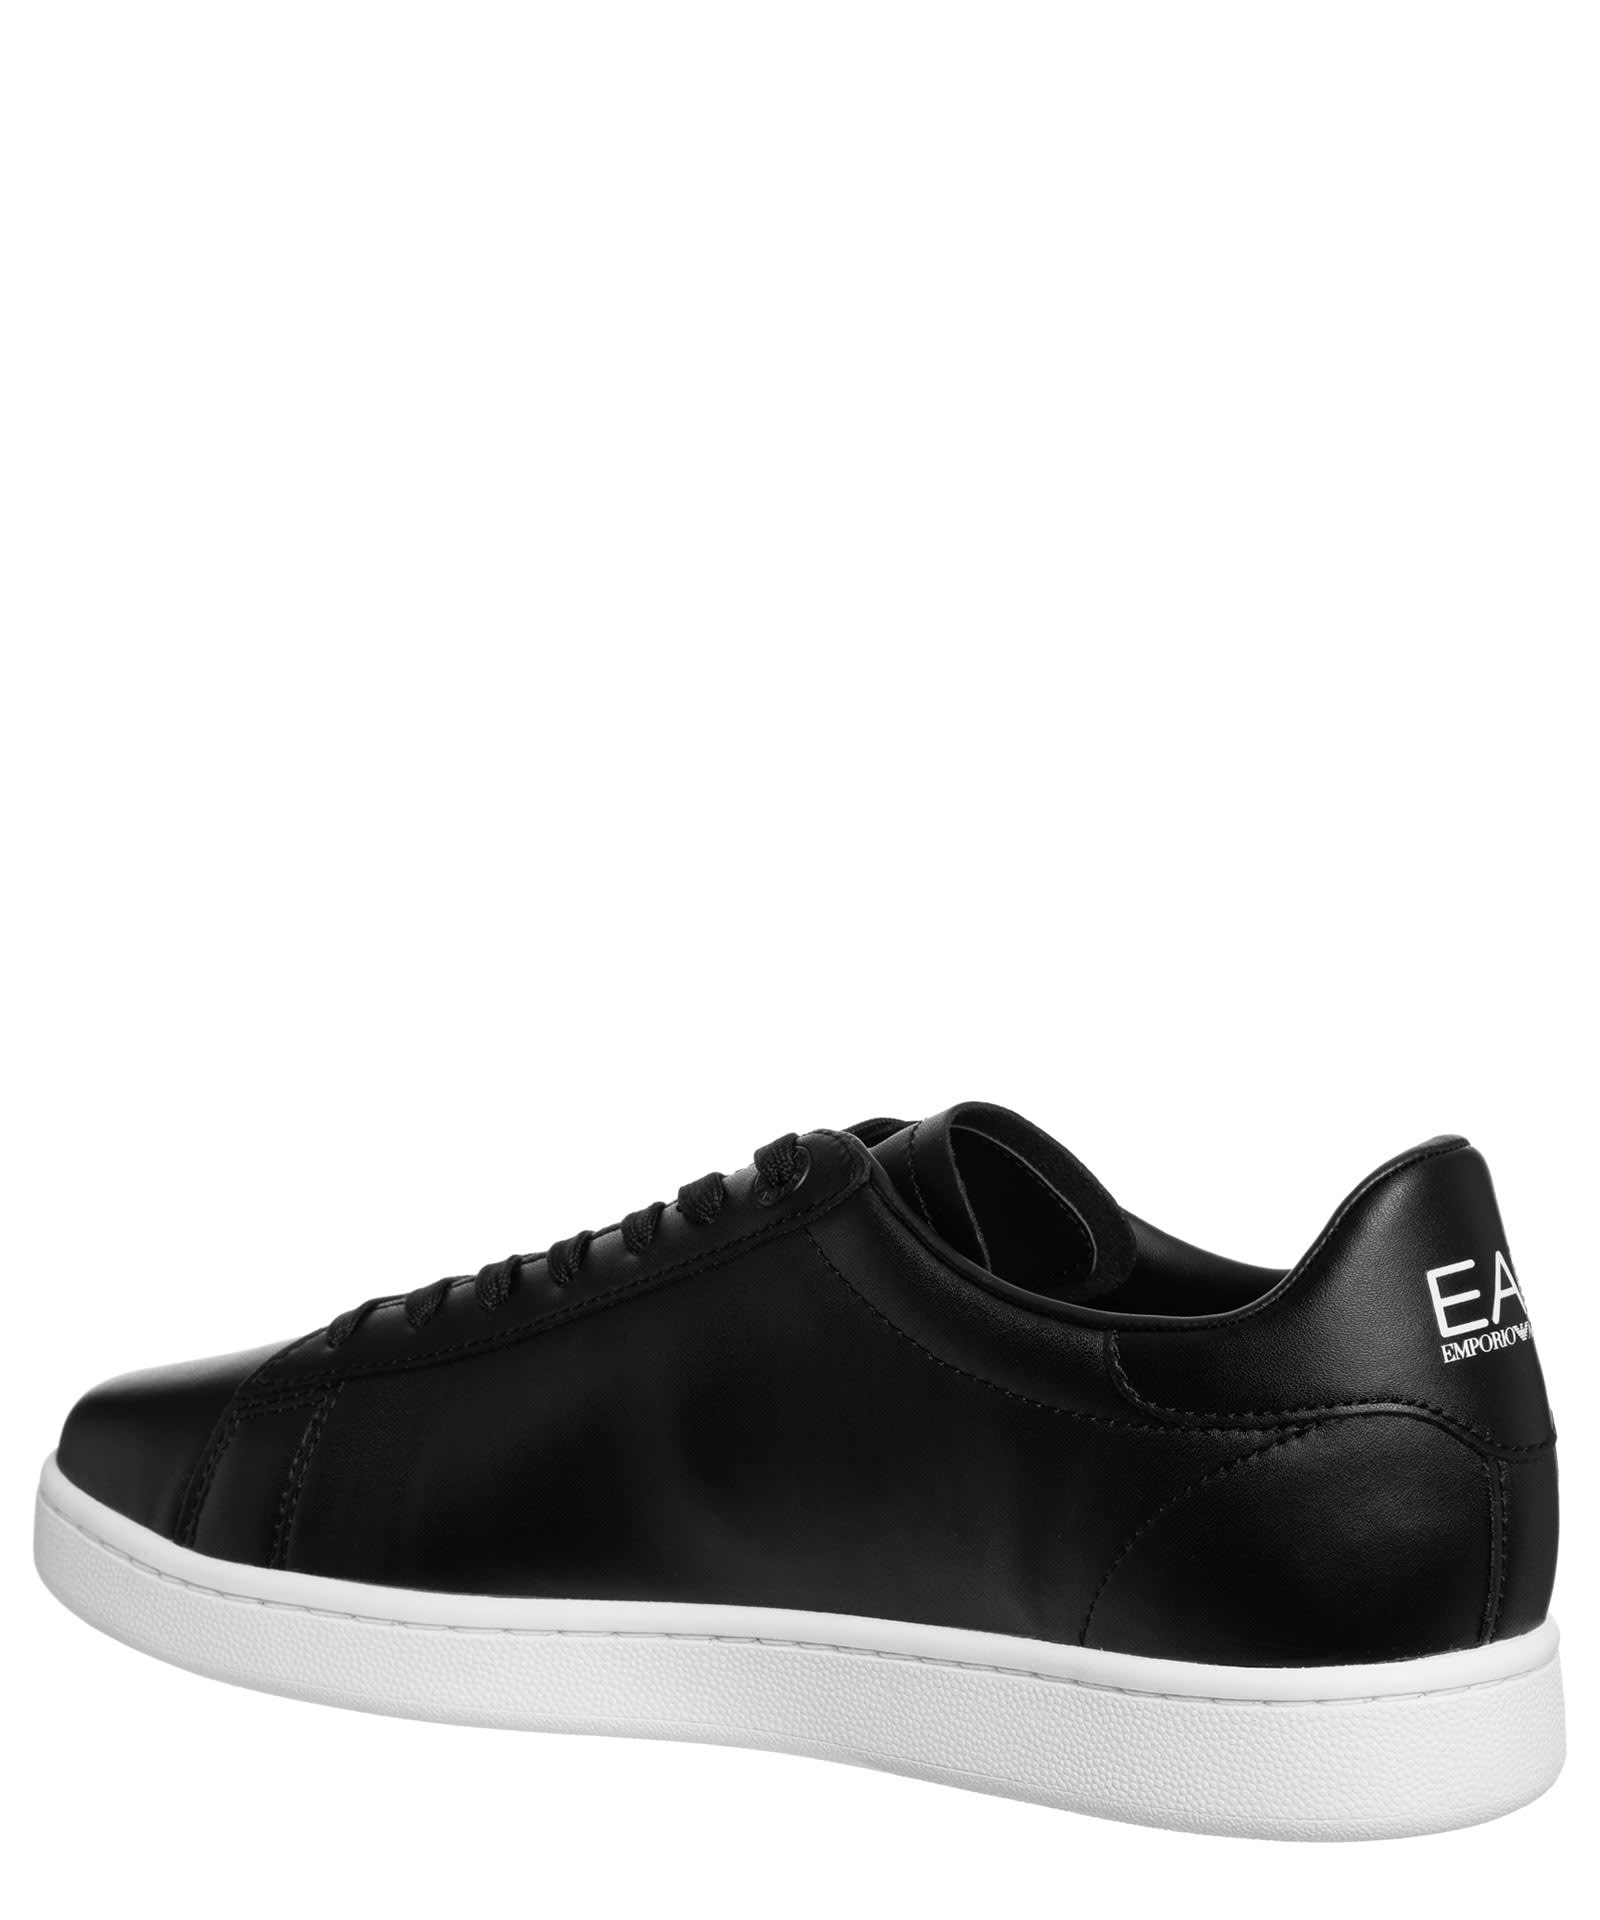 EA7 Classic CC sneakers